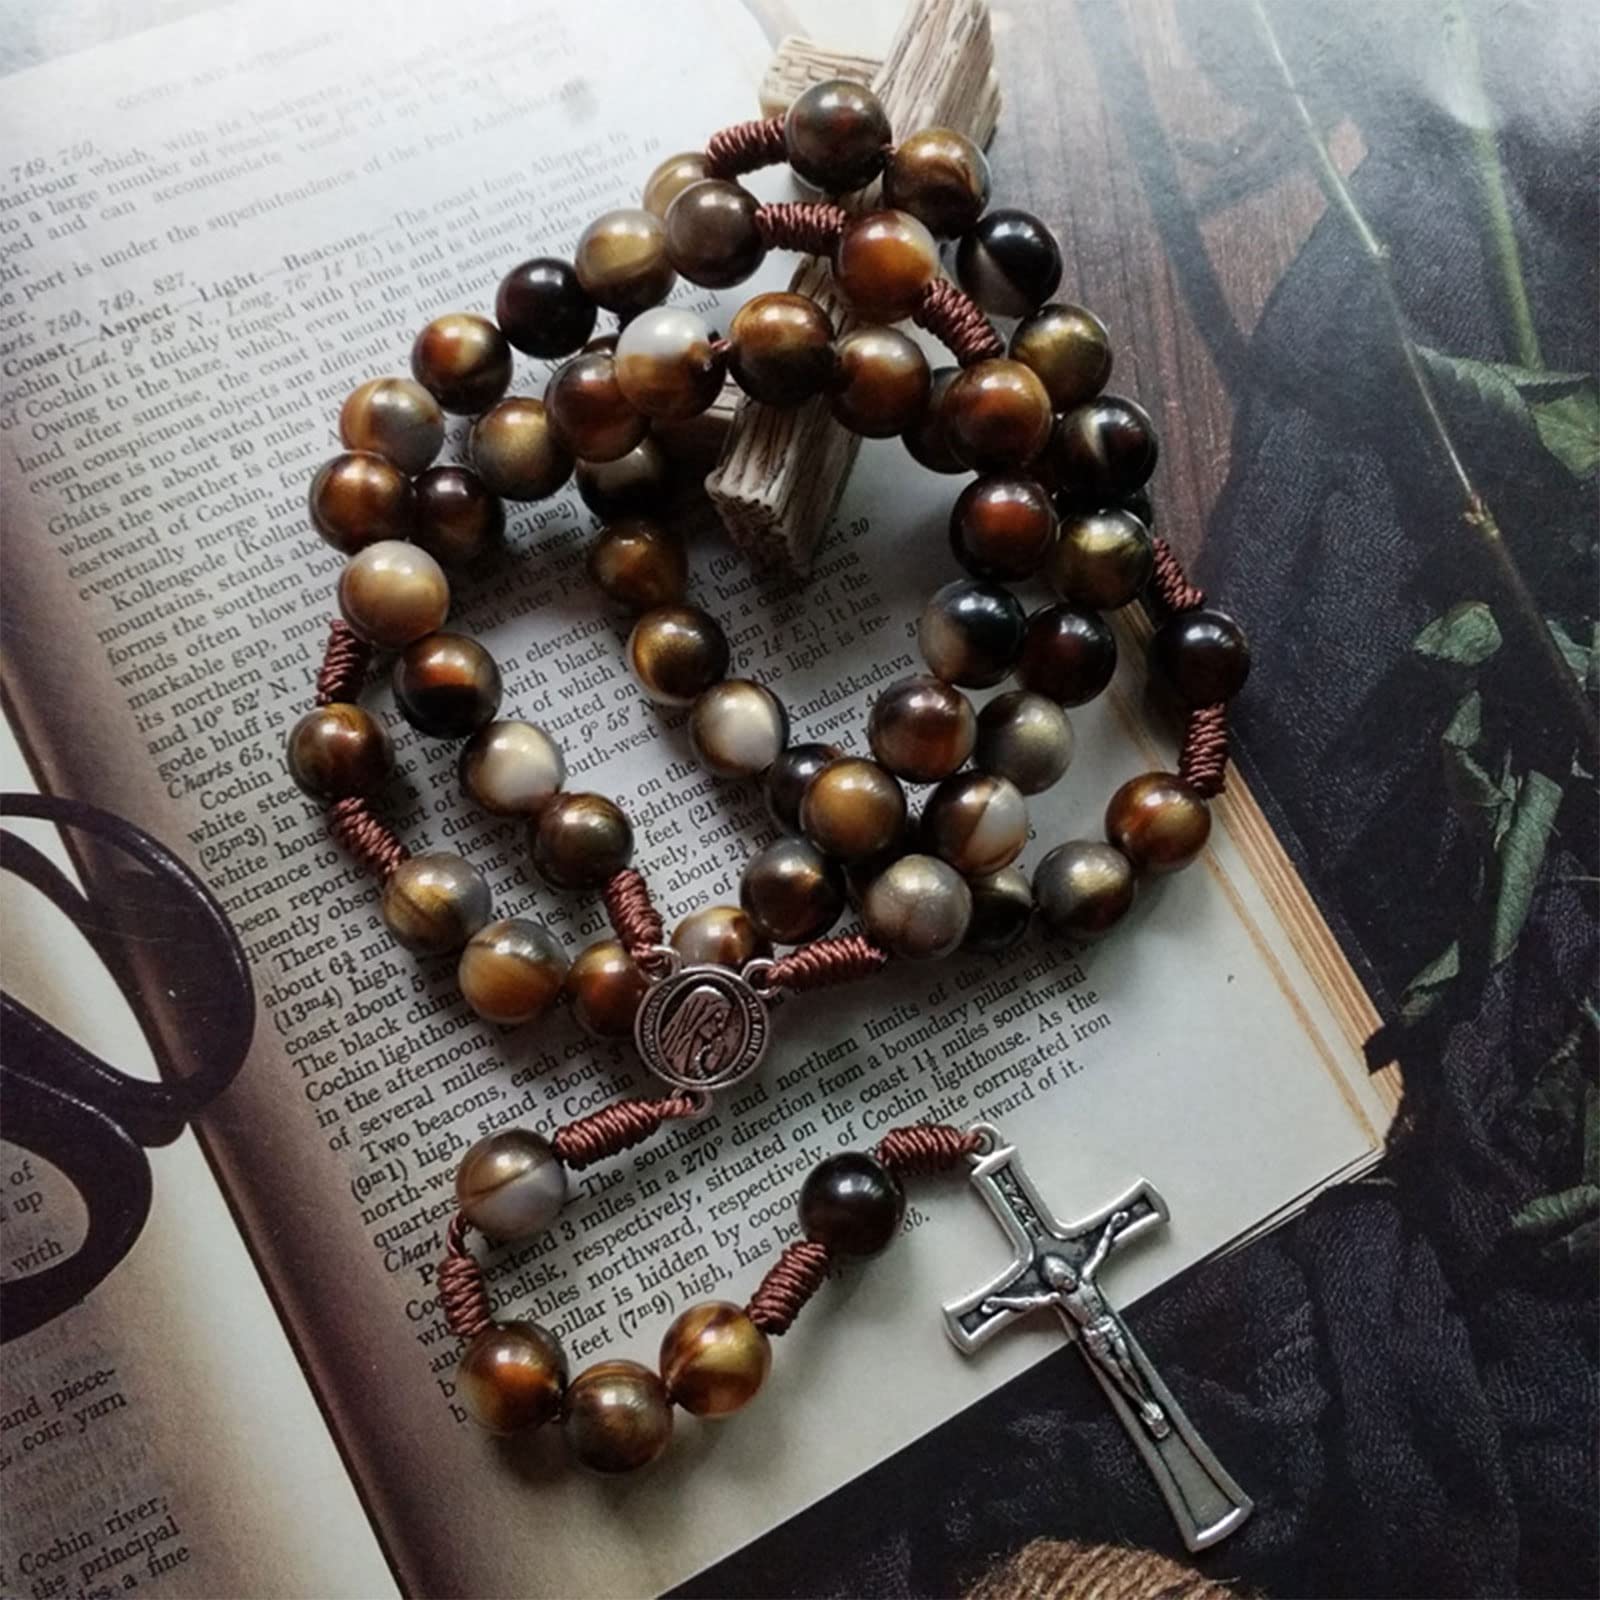 hejhncii Catholic Rosaries Necklace Crucifix Prayer Beads Pendant Necklace Prayer Religious For Cross Long Chain Handmade Jewelry Cross Pendant Necklace